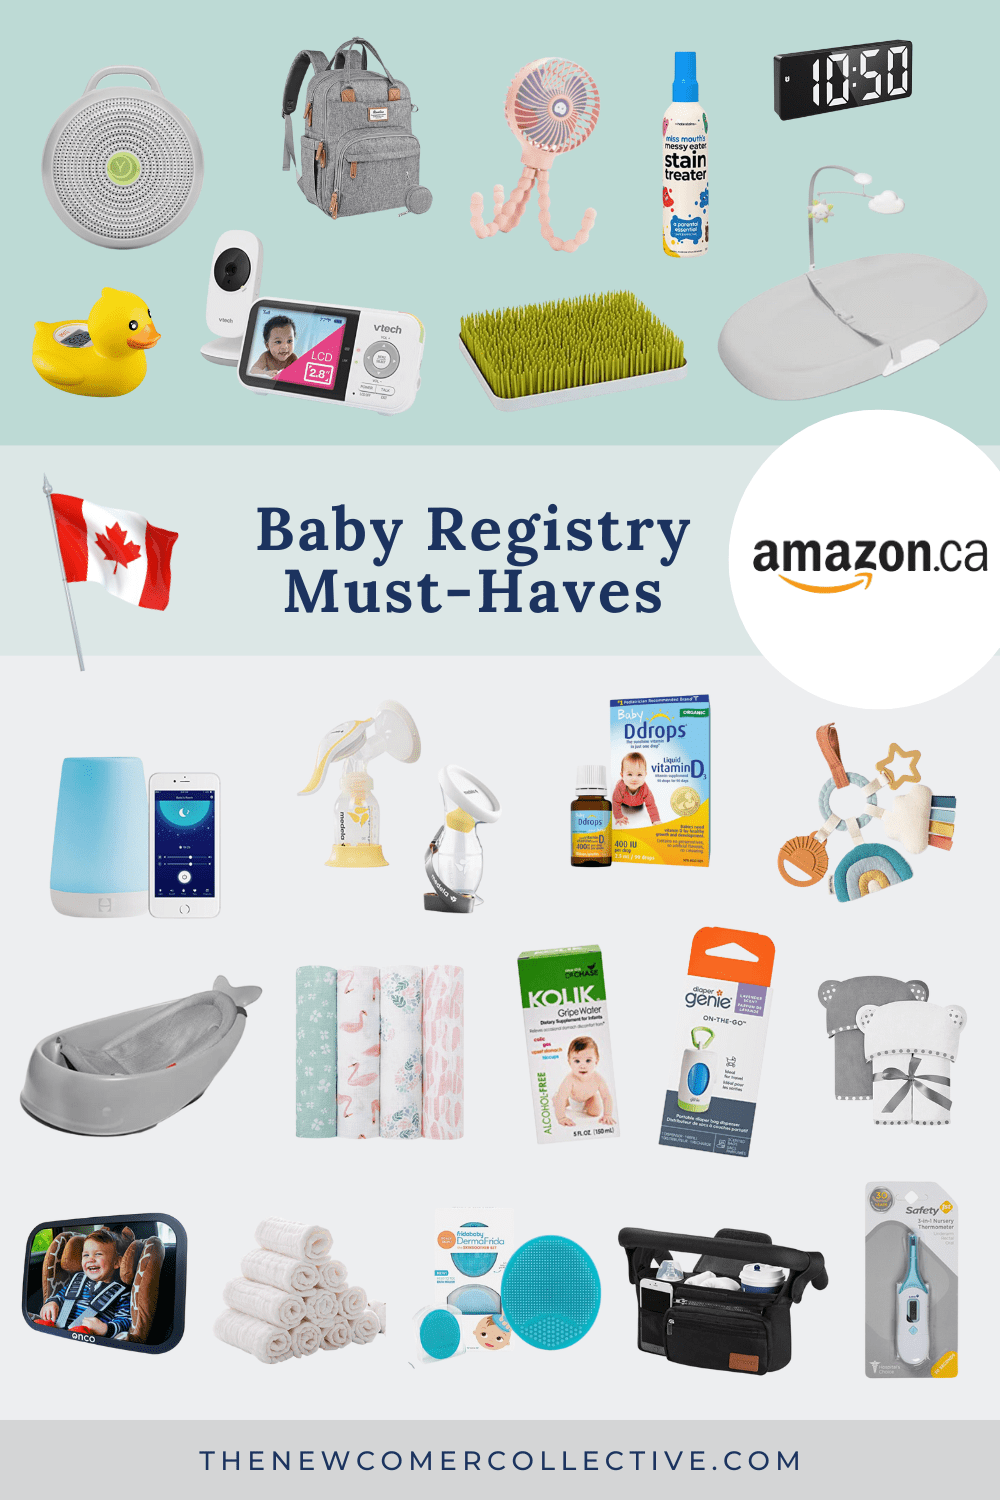 Baby Registry Must-Haves